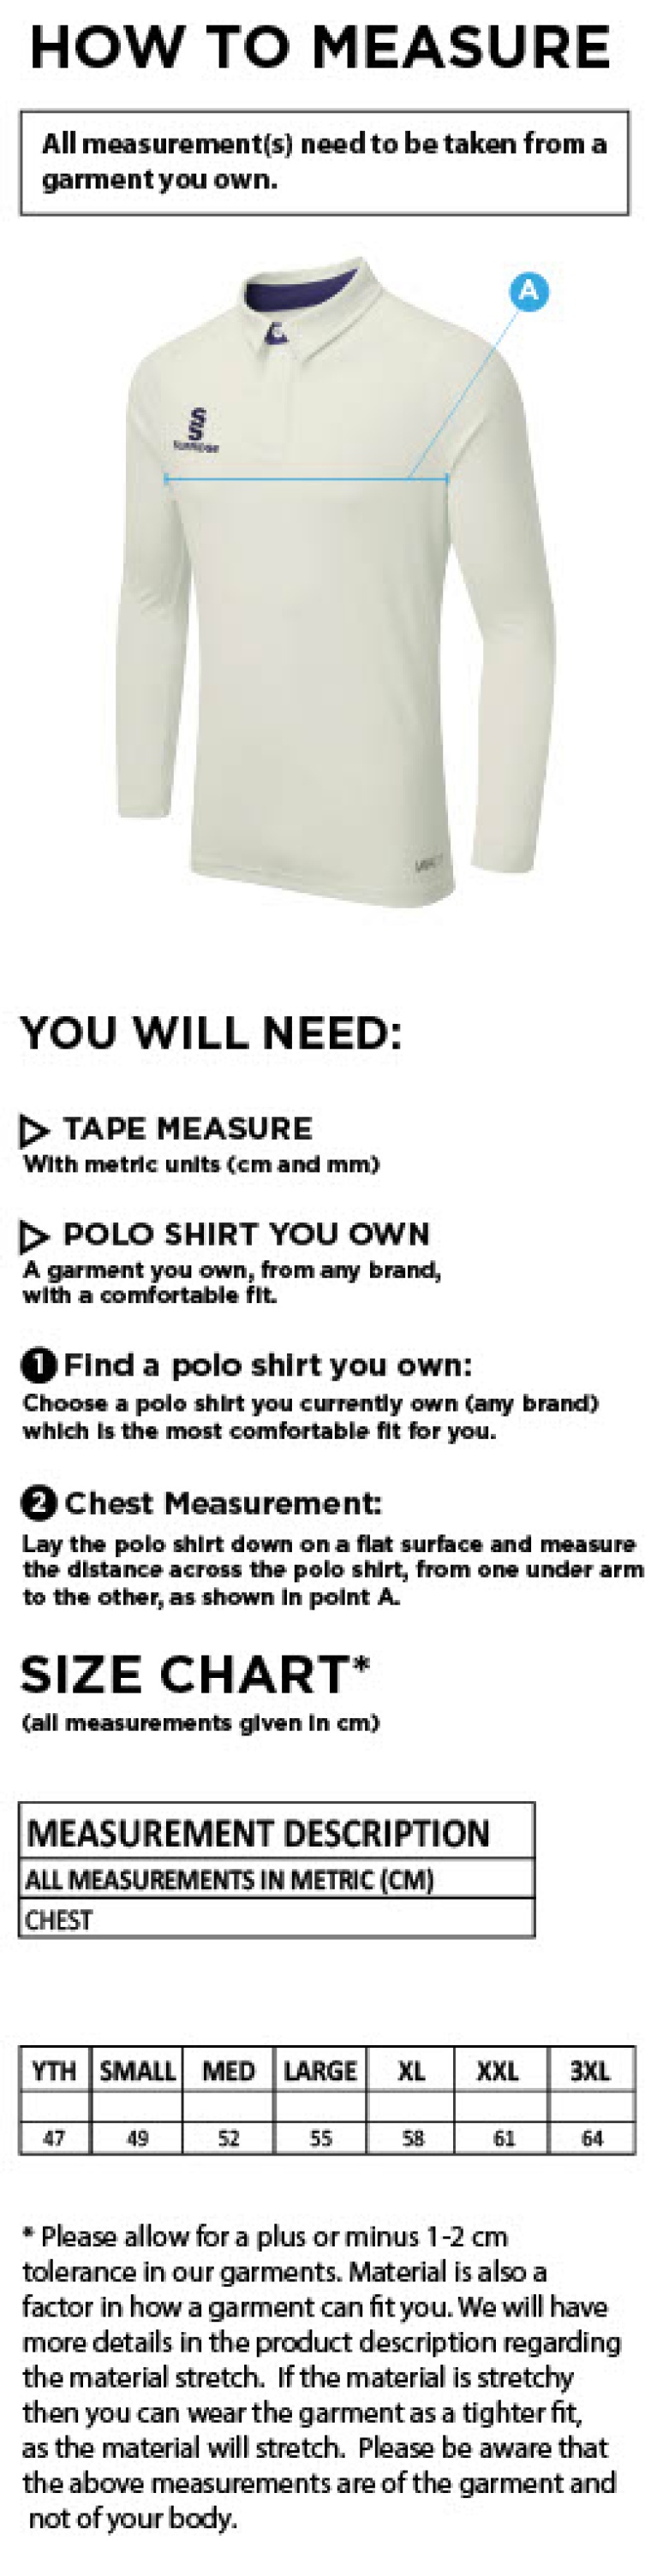 Oakfield & Rowlands CC - Ergo Long Sleeve Maroon Trim Shirt - Size Guide